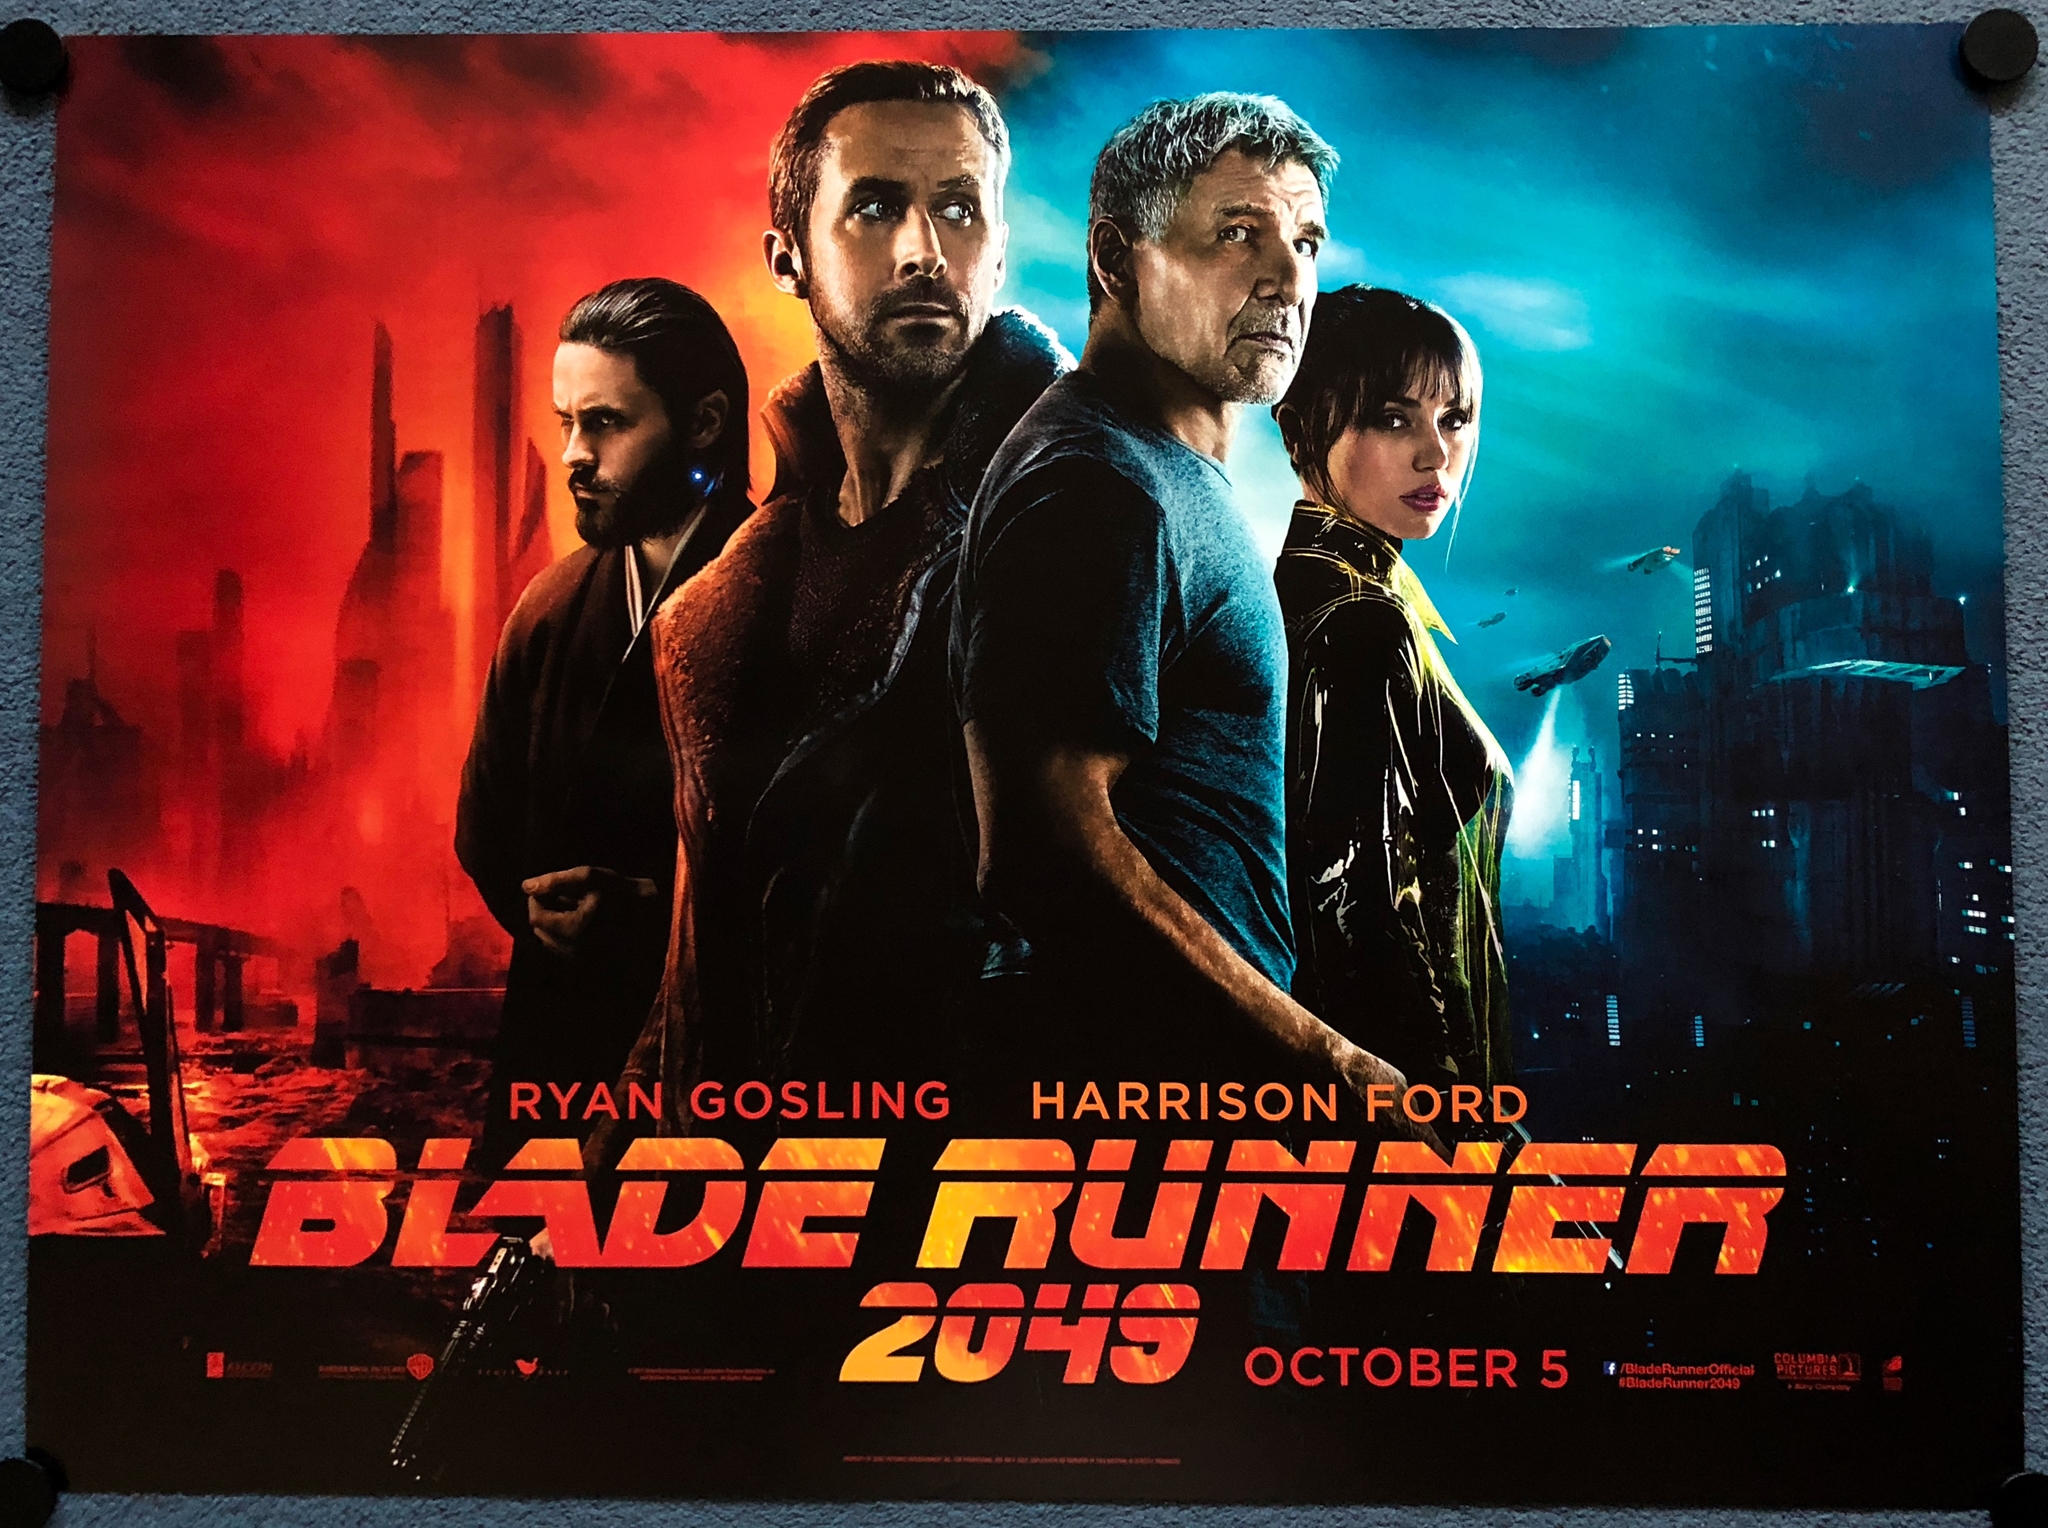 BLADE RUNNER 2049 (2017) - Lot x 3 - 3 x British UK Quad Film Posters - Advance 'Harrison Ford' - Image 4 of 4